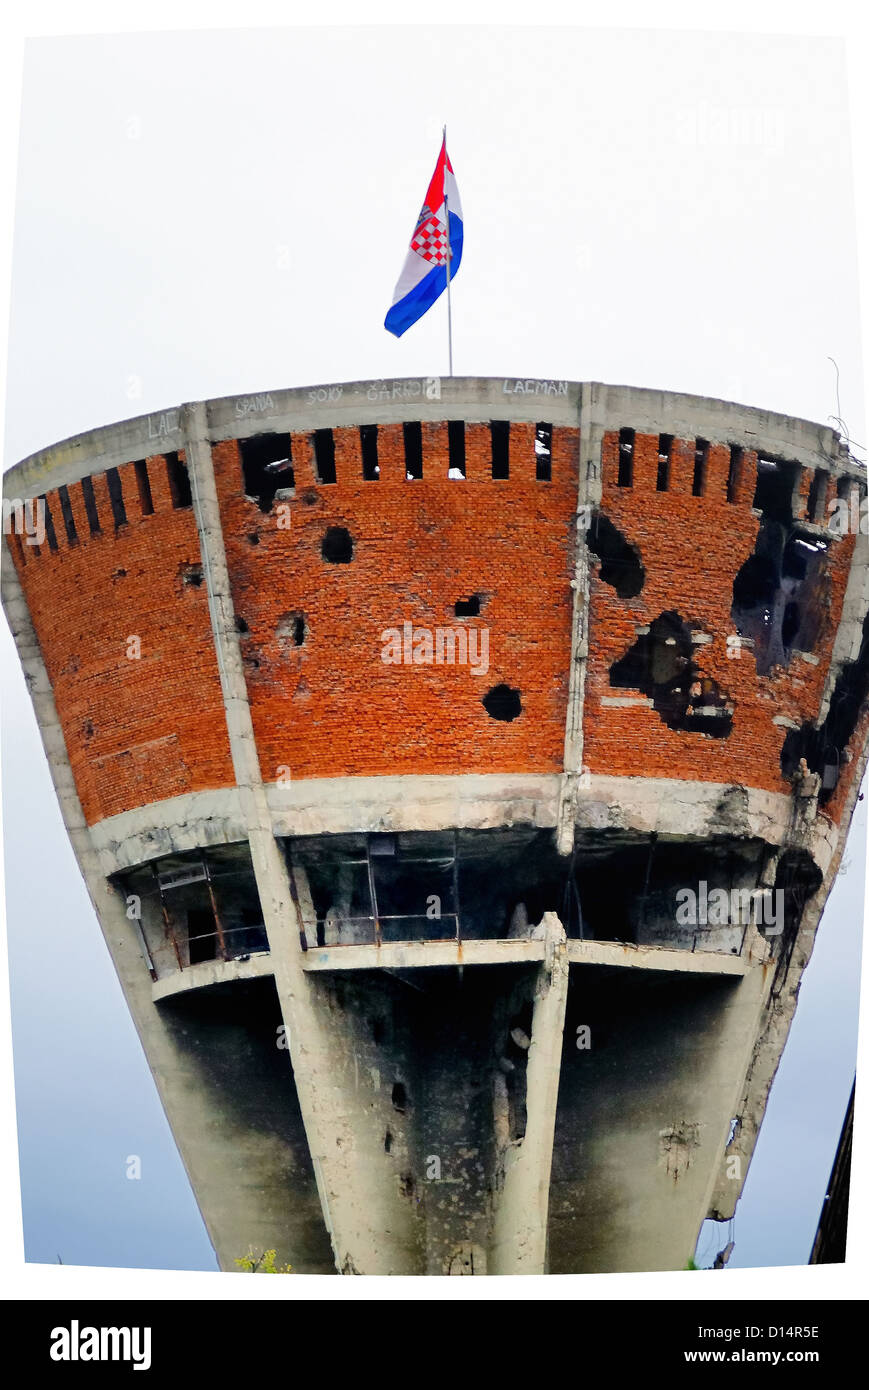 Croatia, Vukovar. The Vukovar water tower. Heavily damaged in the battle. Stock Photo